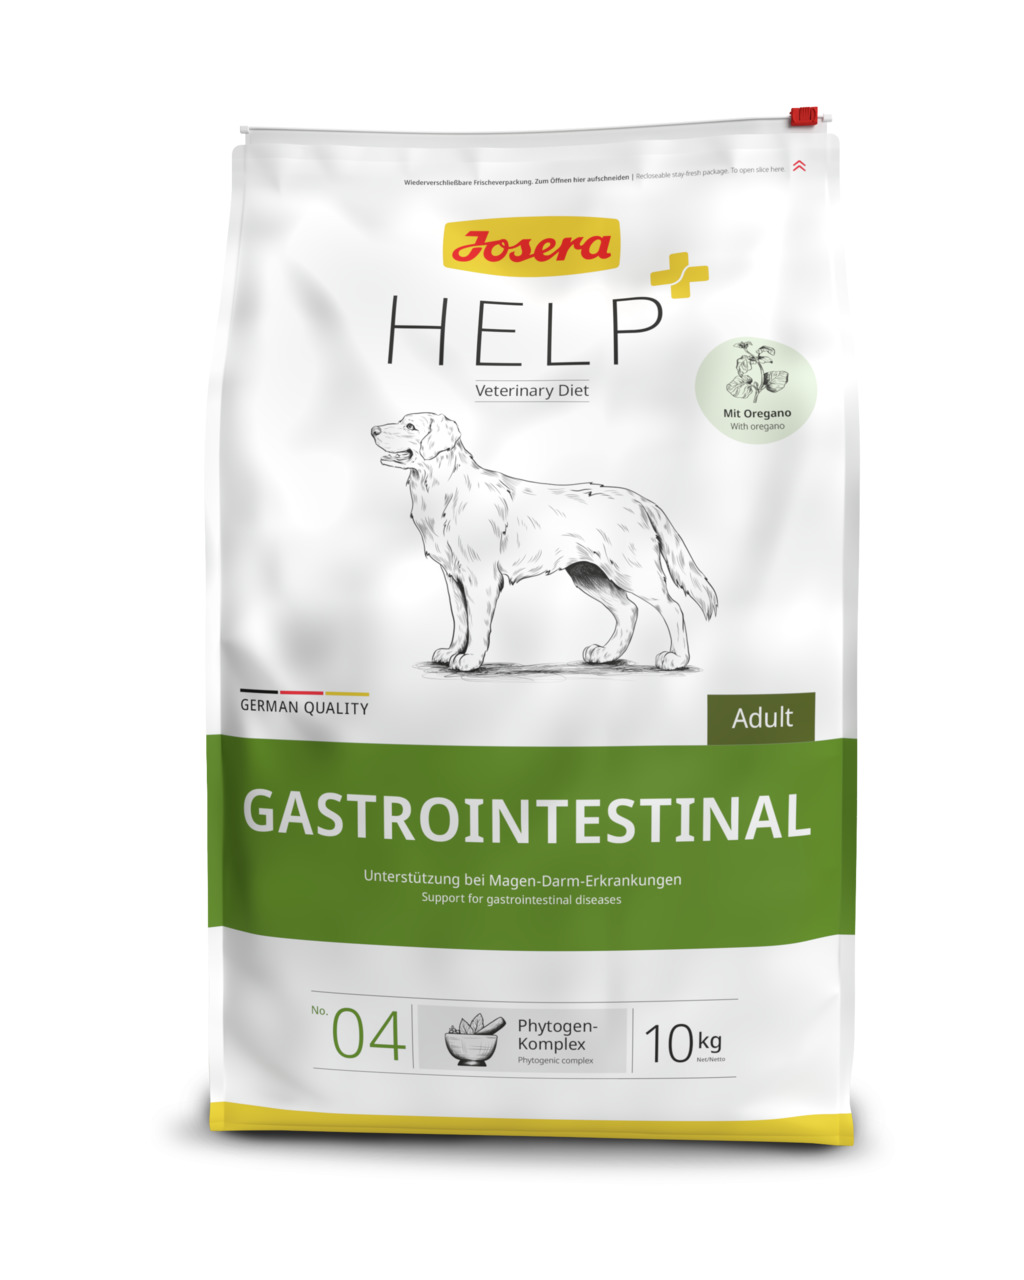 Josera Help Gastrointestinal Hunde Trockenfutter 10 kg